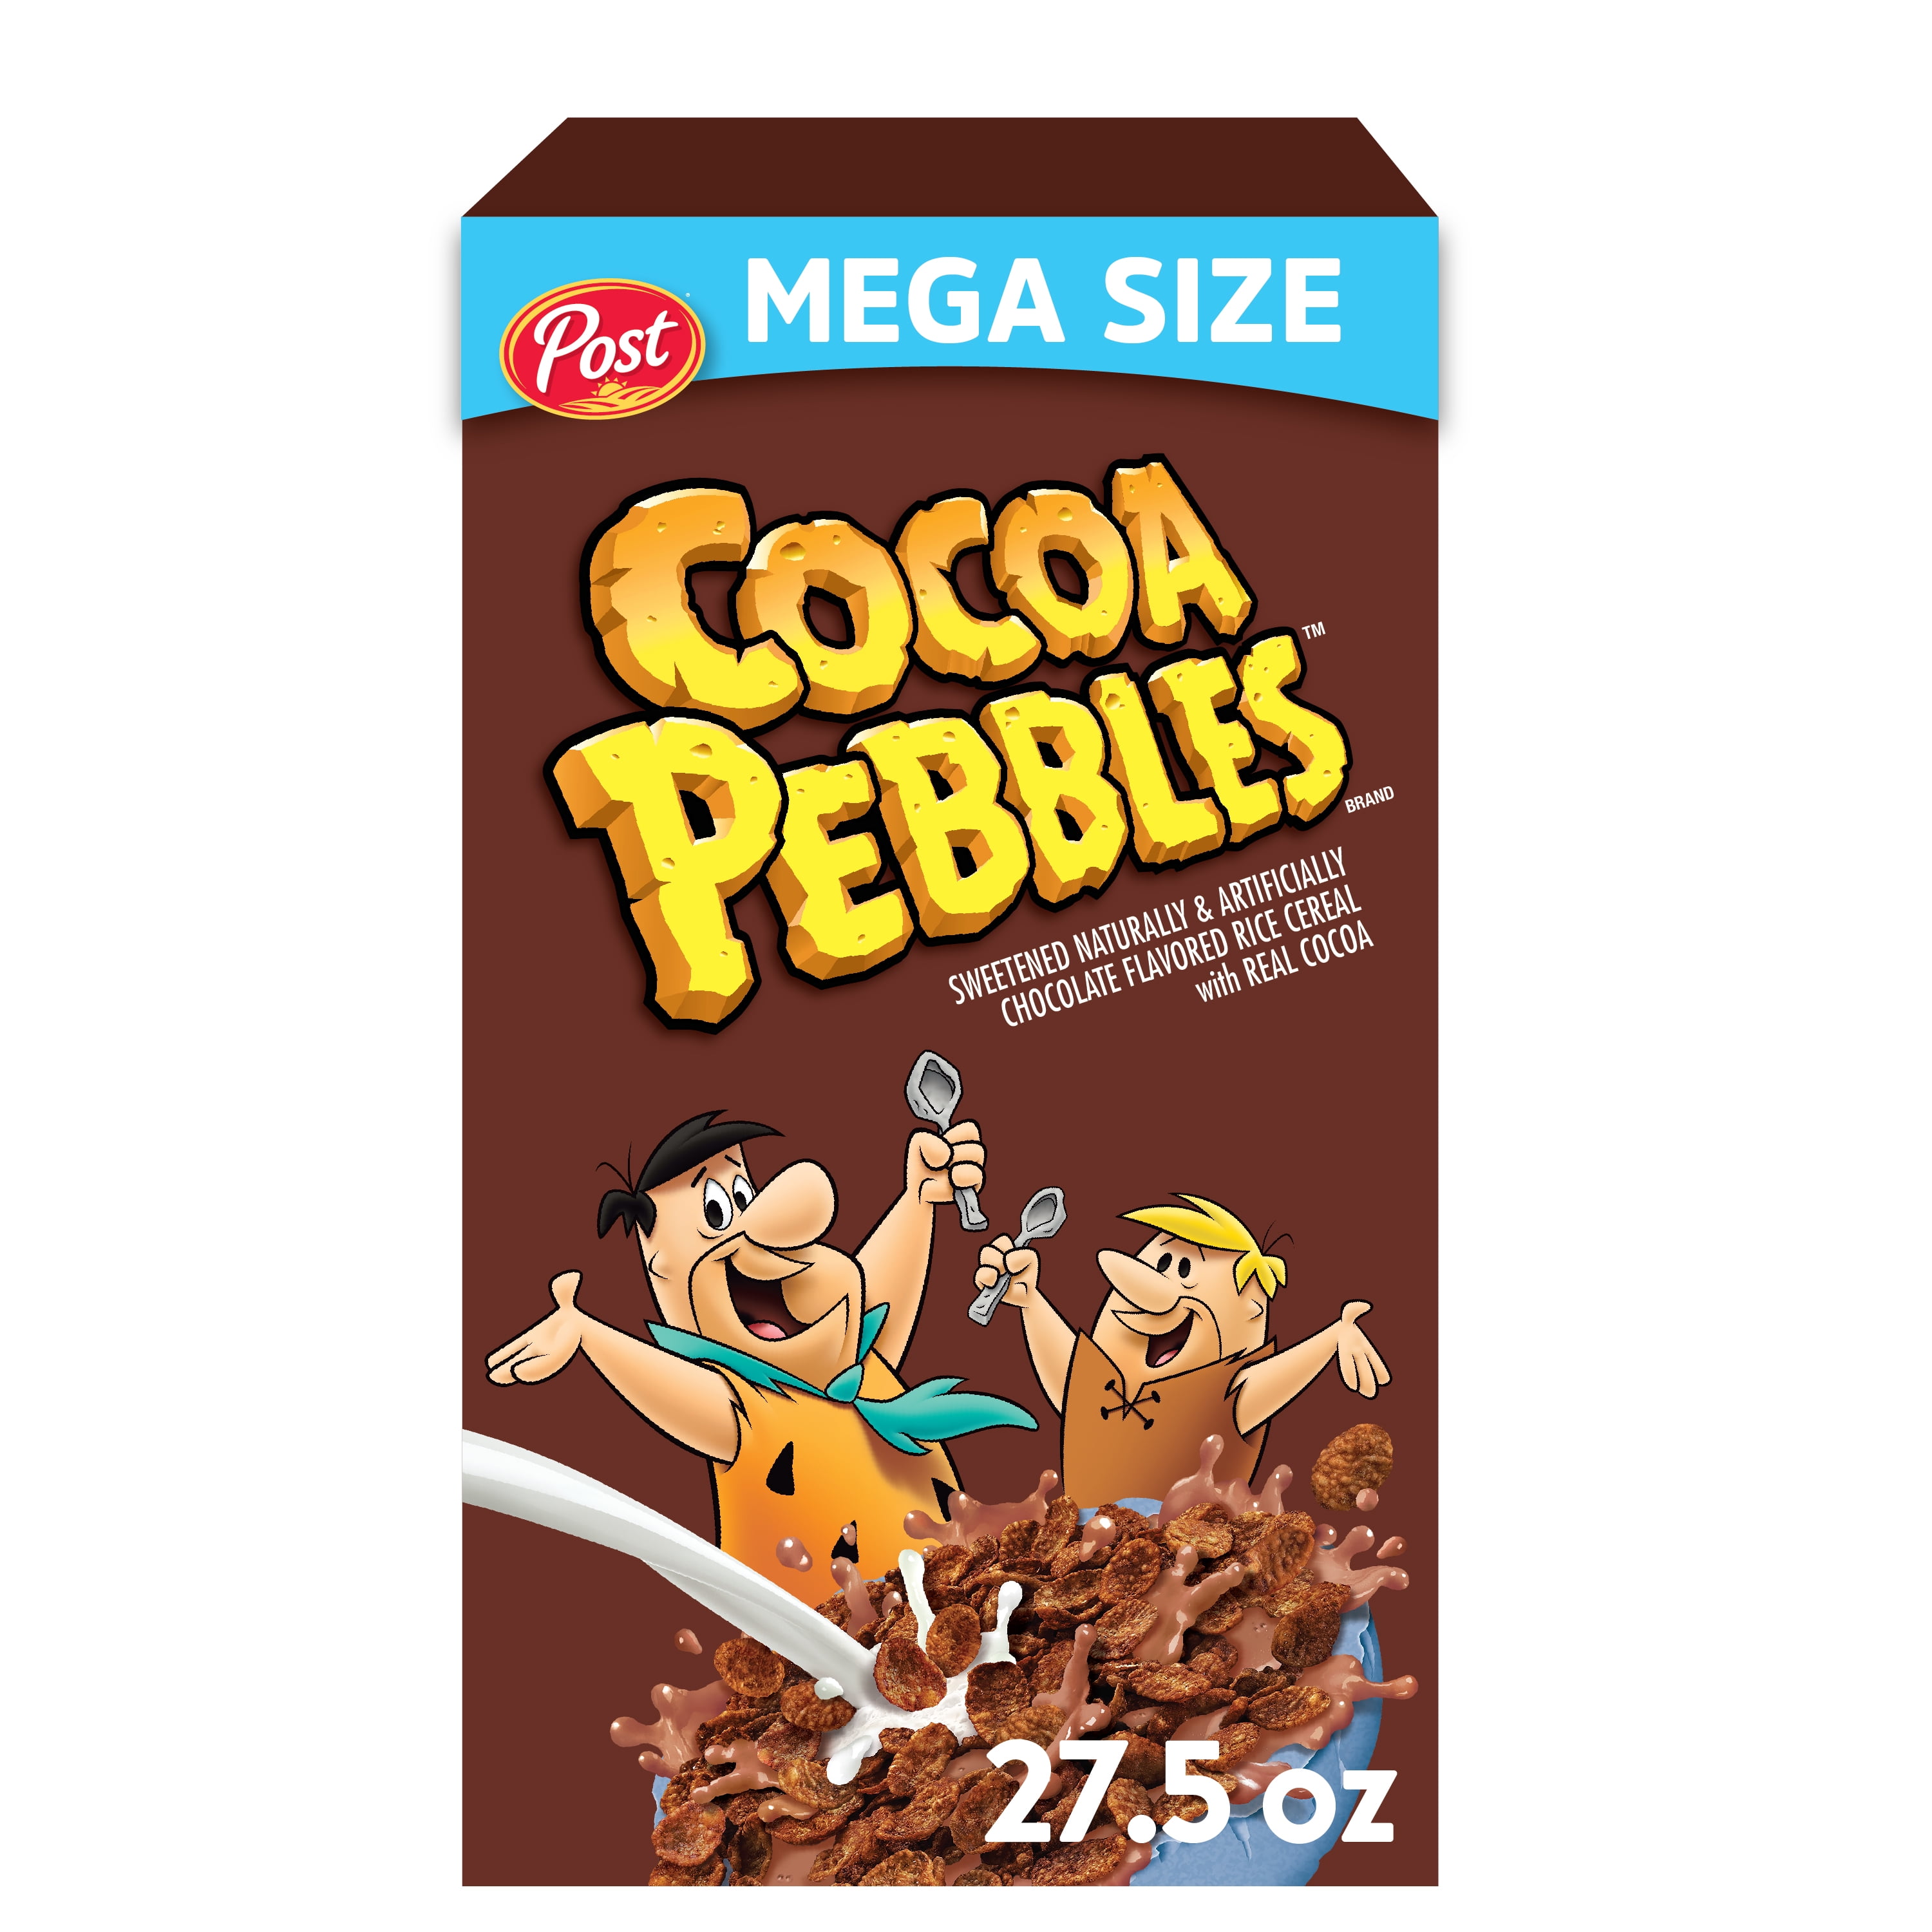 Post Cocoa PEBBLES Breakfast Cereal, Gluten Free, Cocoa Flavored Crispy Rice Cereal, Breakfast Snacks, 27.5 Oz